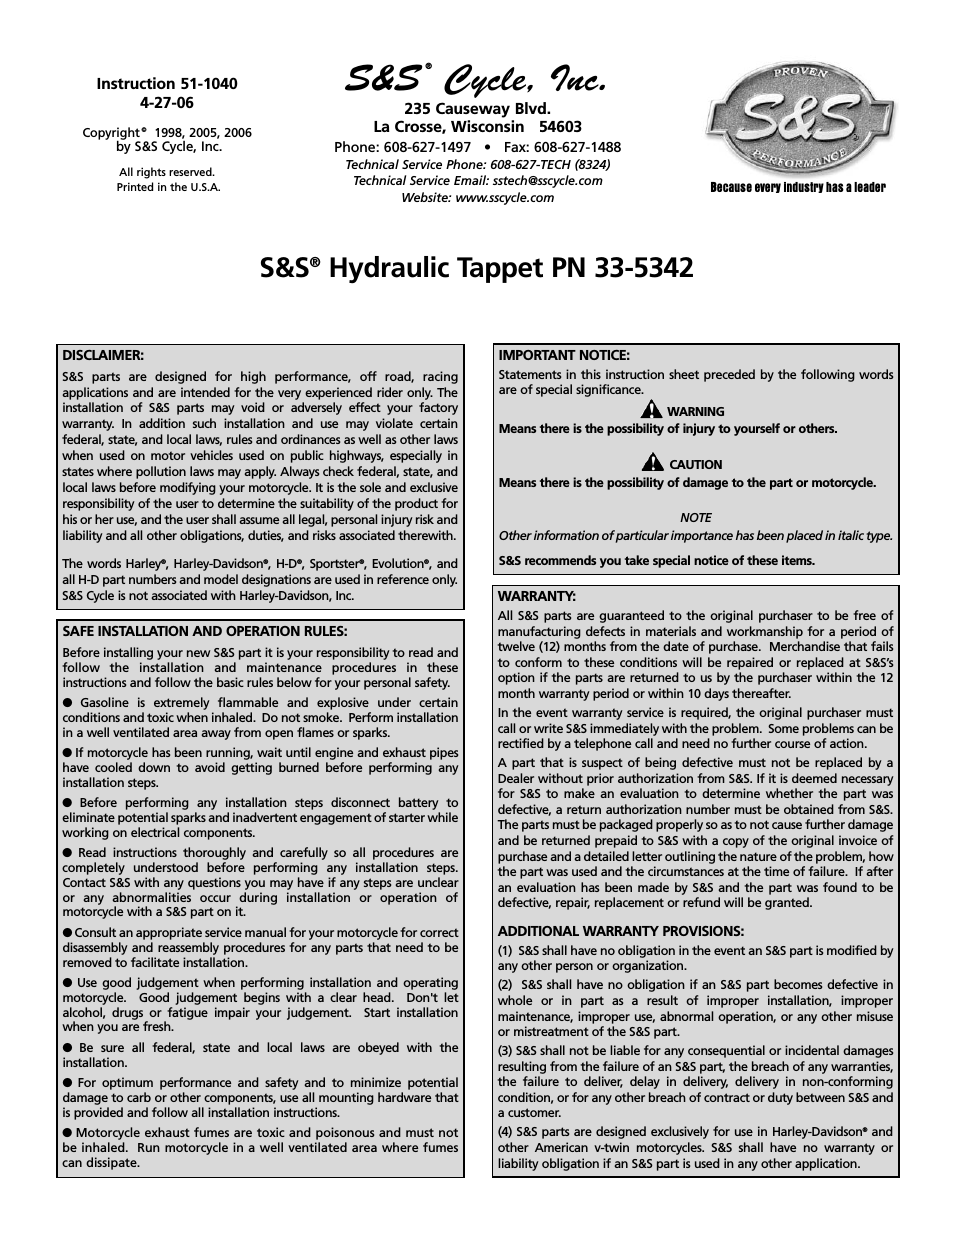 Hydraulic Tappet PN 33-5342